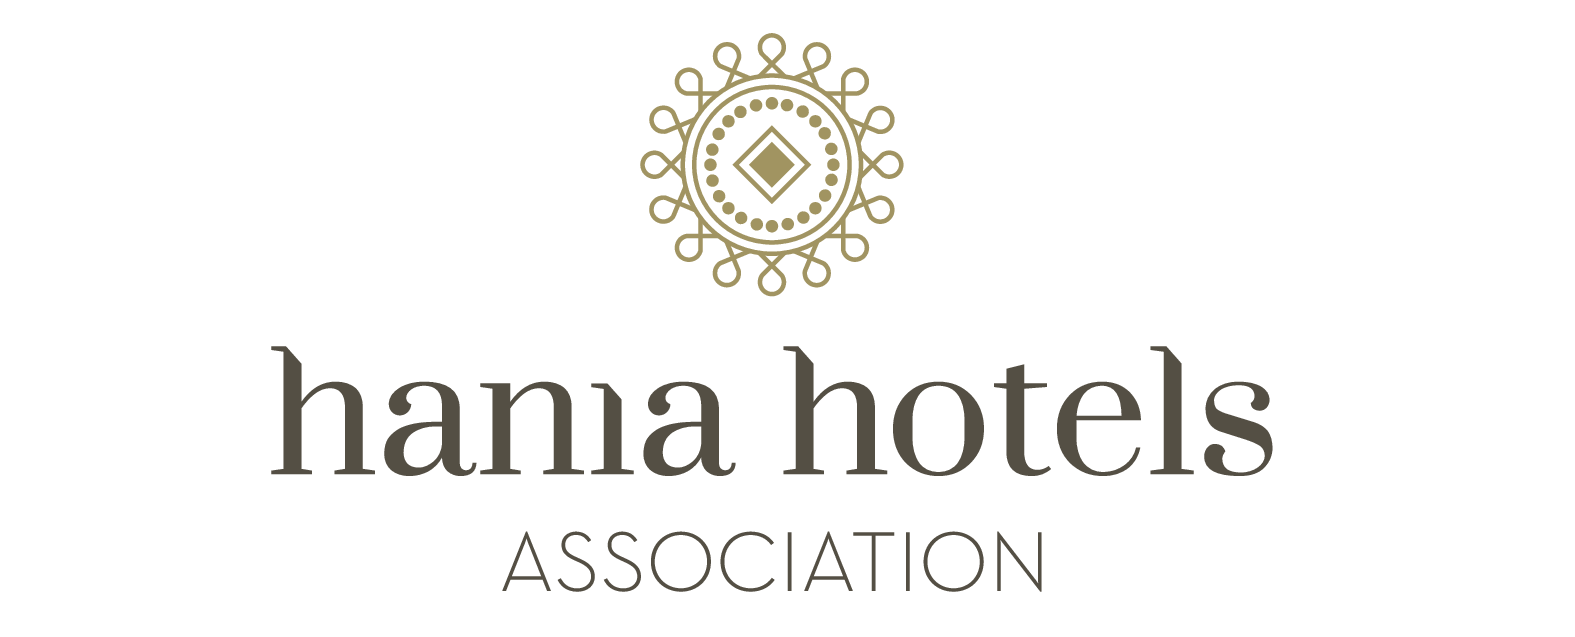 Chania Hotels Association